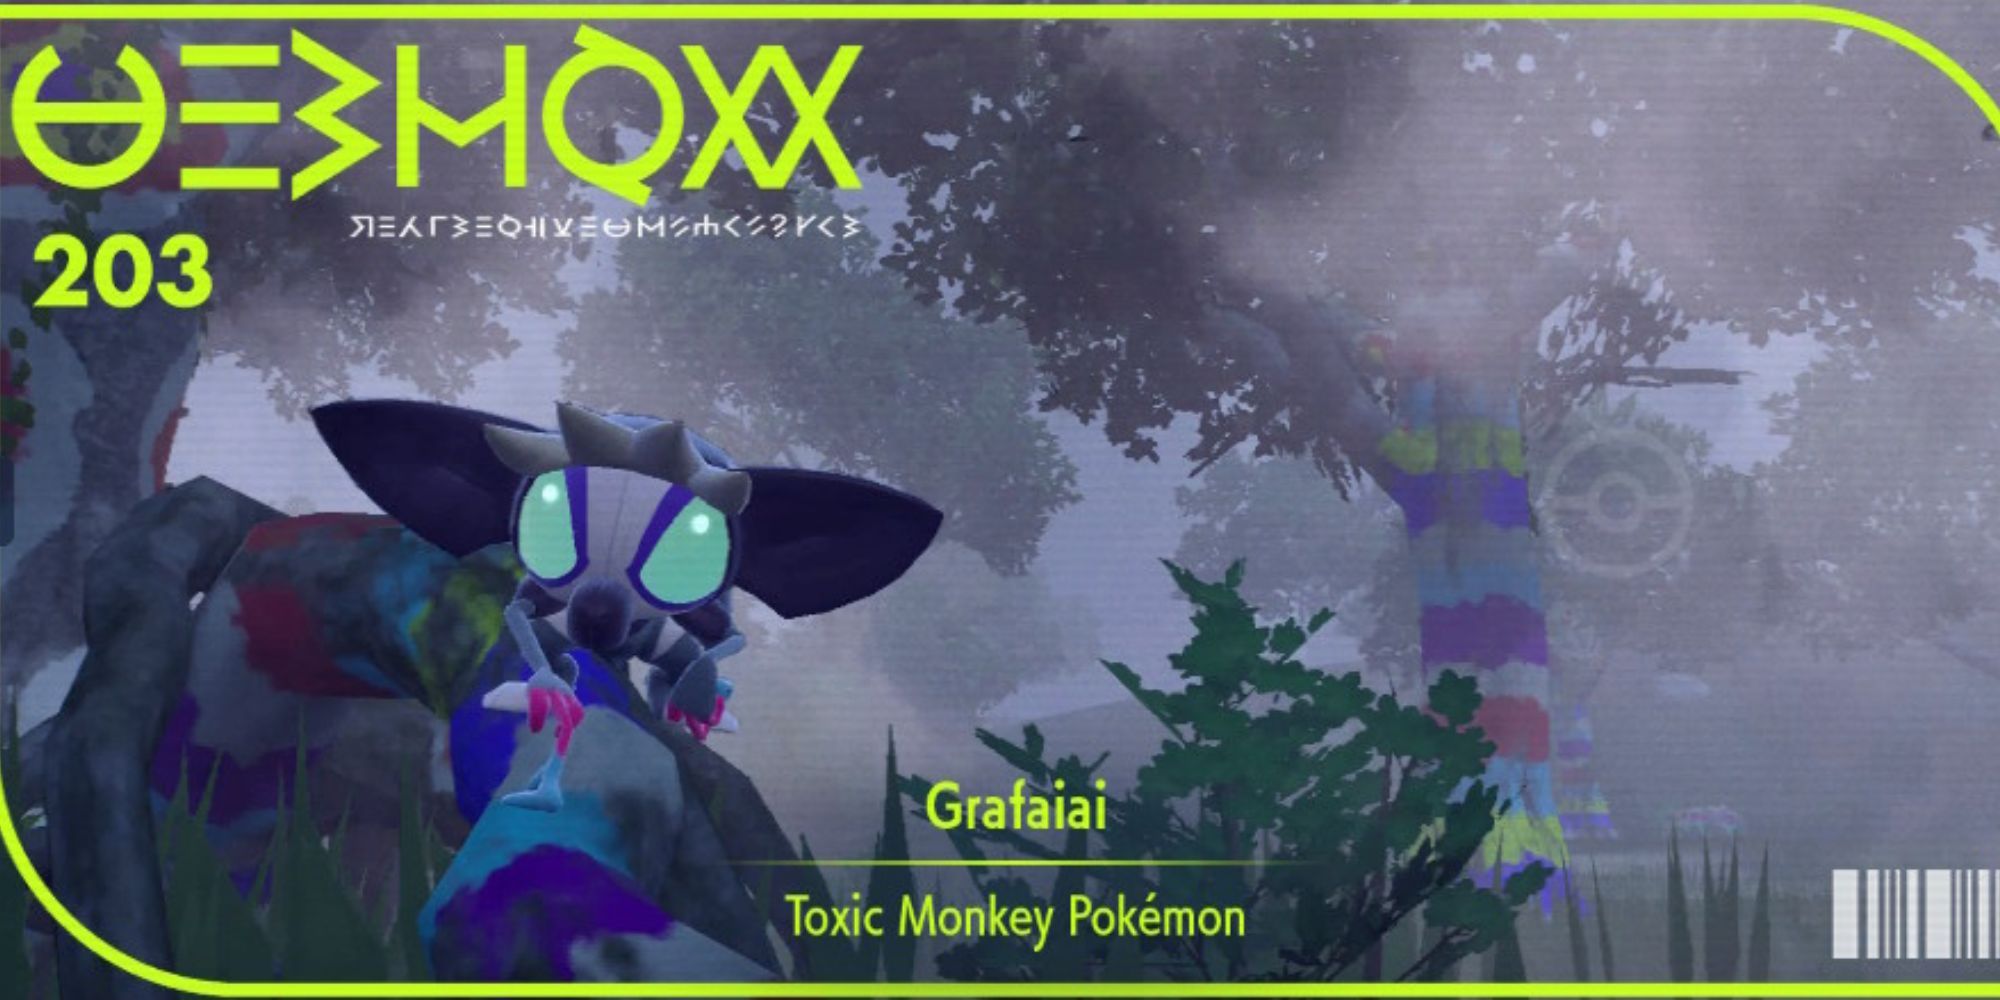 The pokedex cover image for Grafaifai in Pokemon Scarlet & Violet